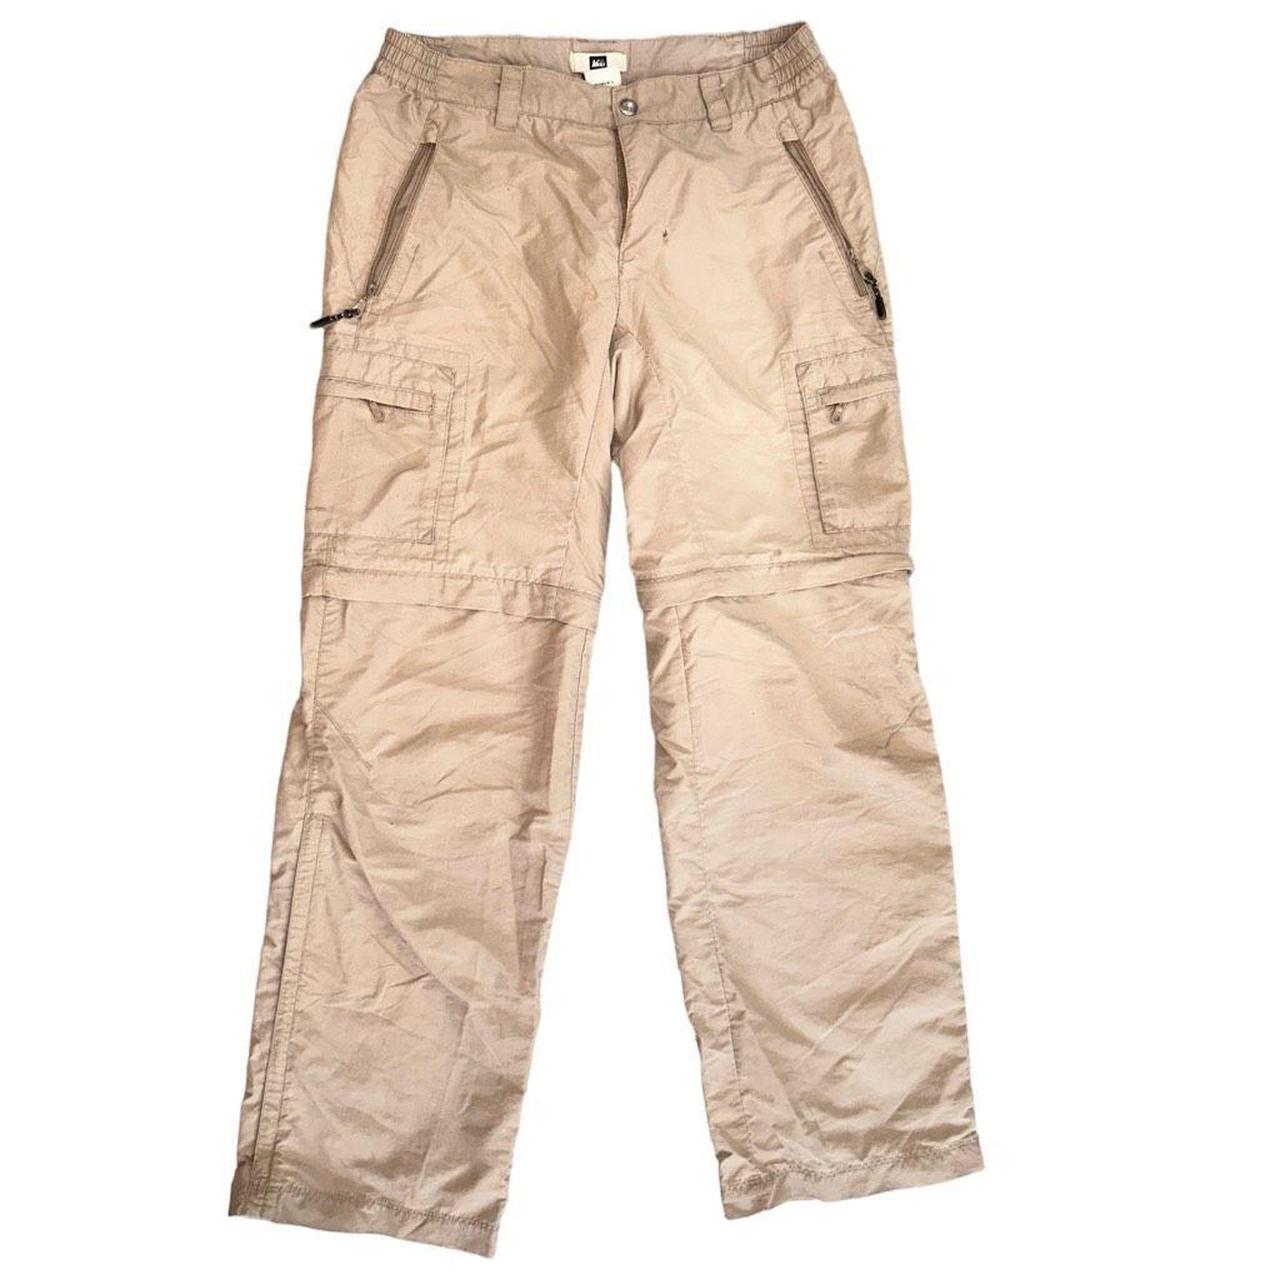 KUHL Strattus Pants Women's Size 2 Style Hiking - Depop